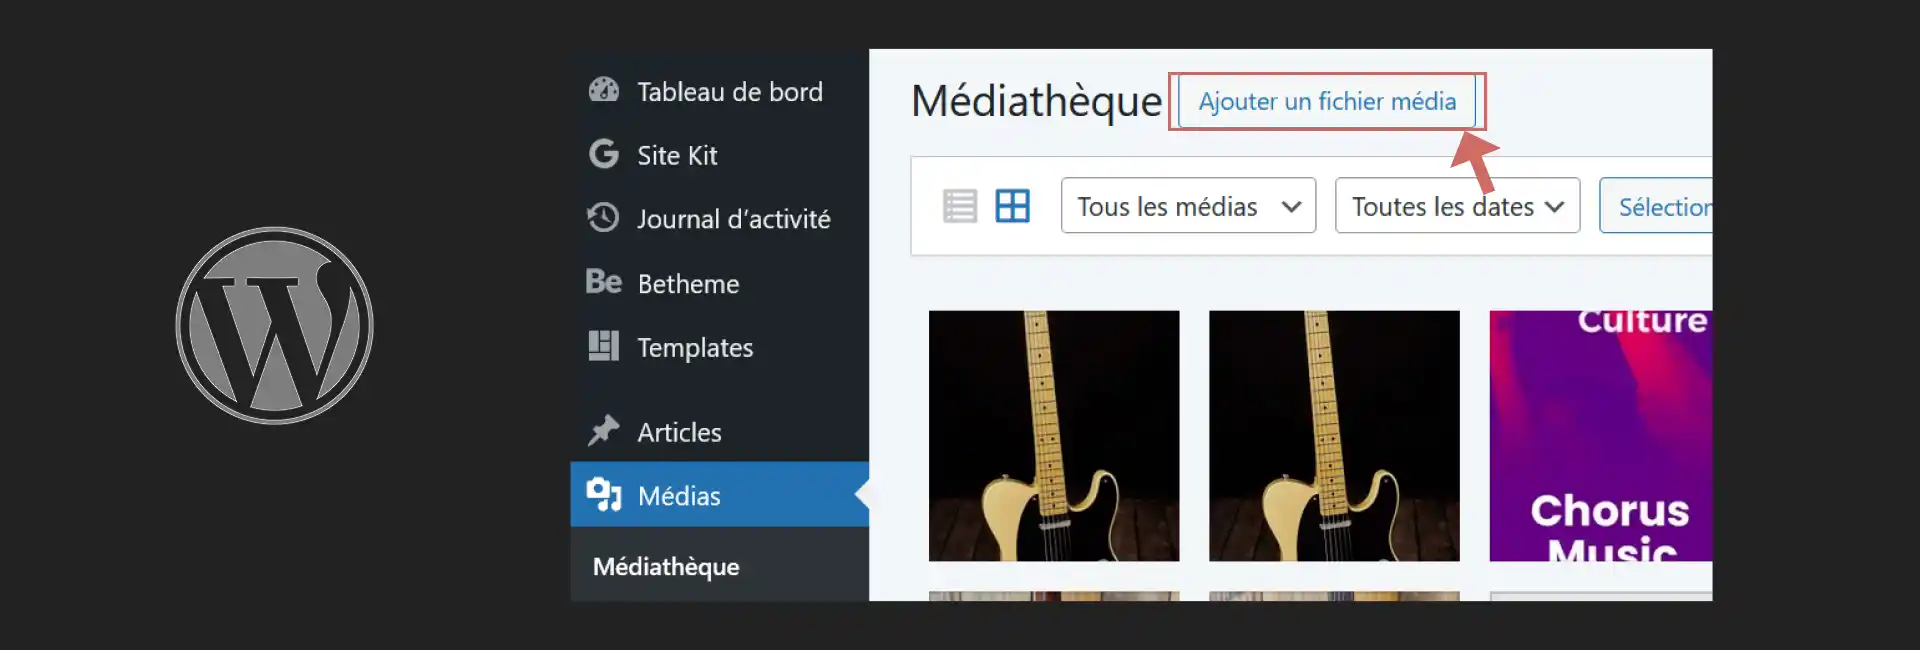 mediatheque-wordpress-ajouter-un-fichier-media